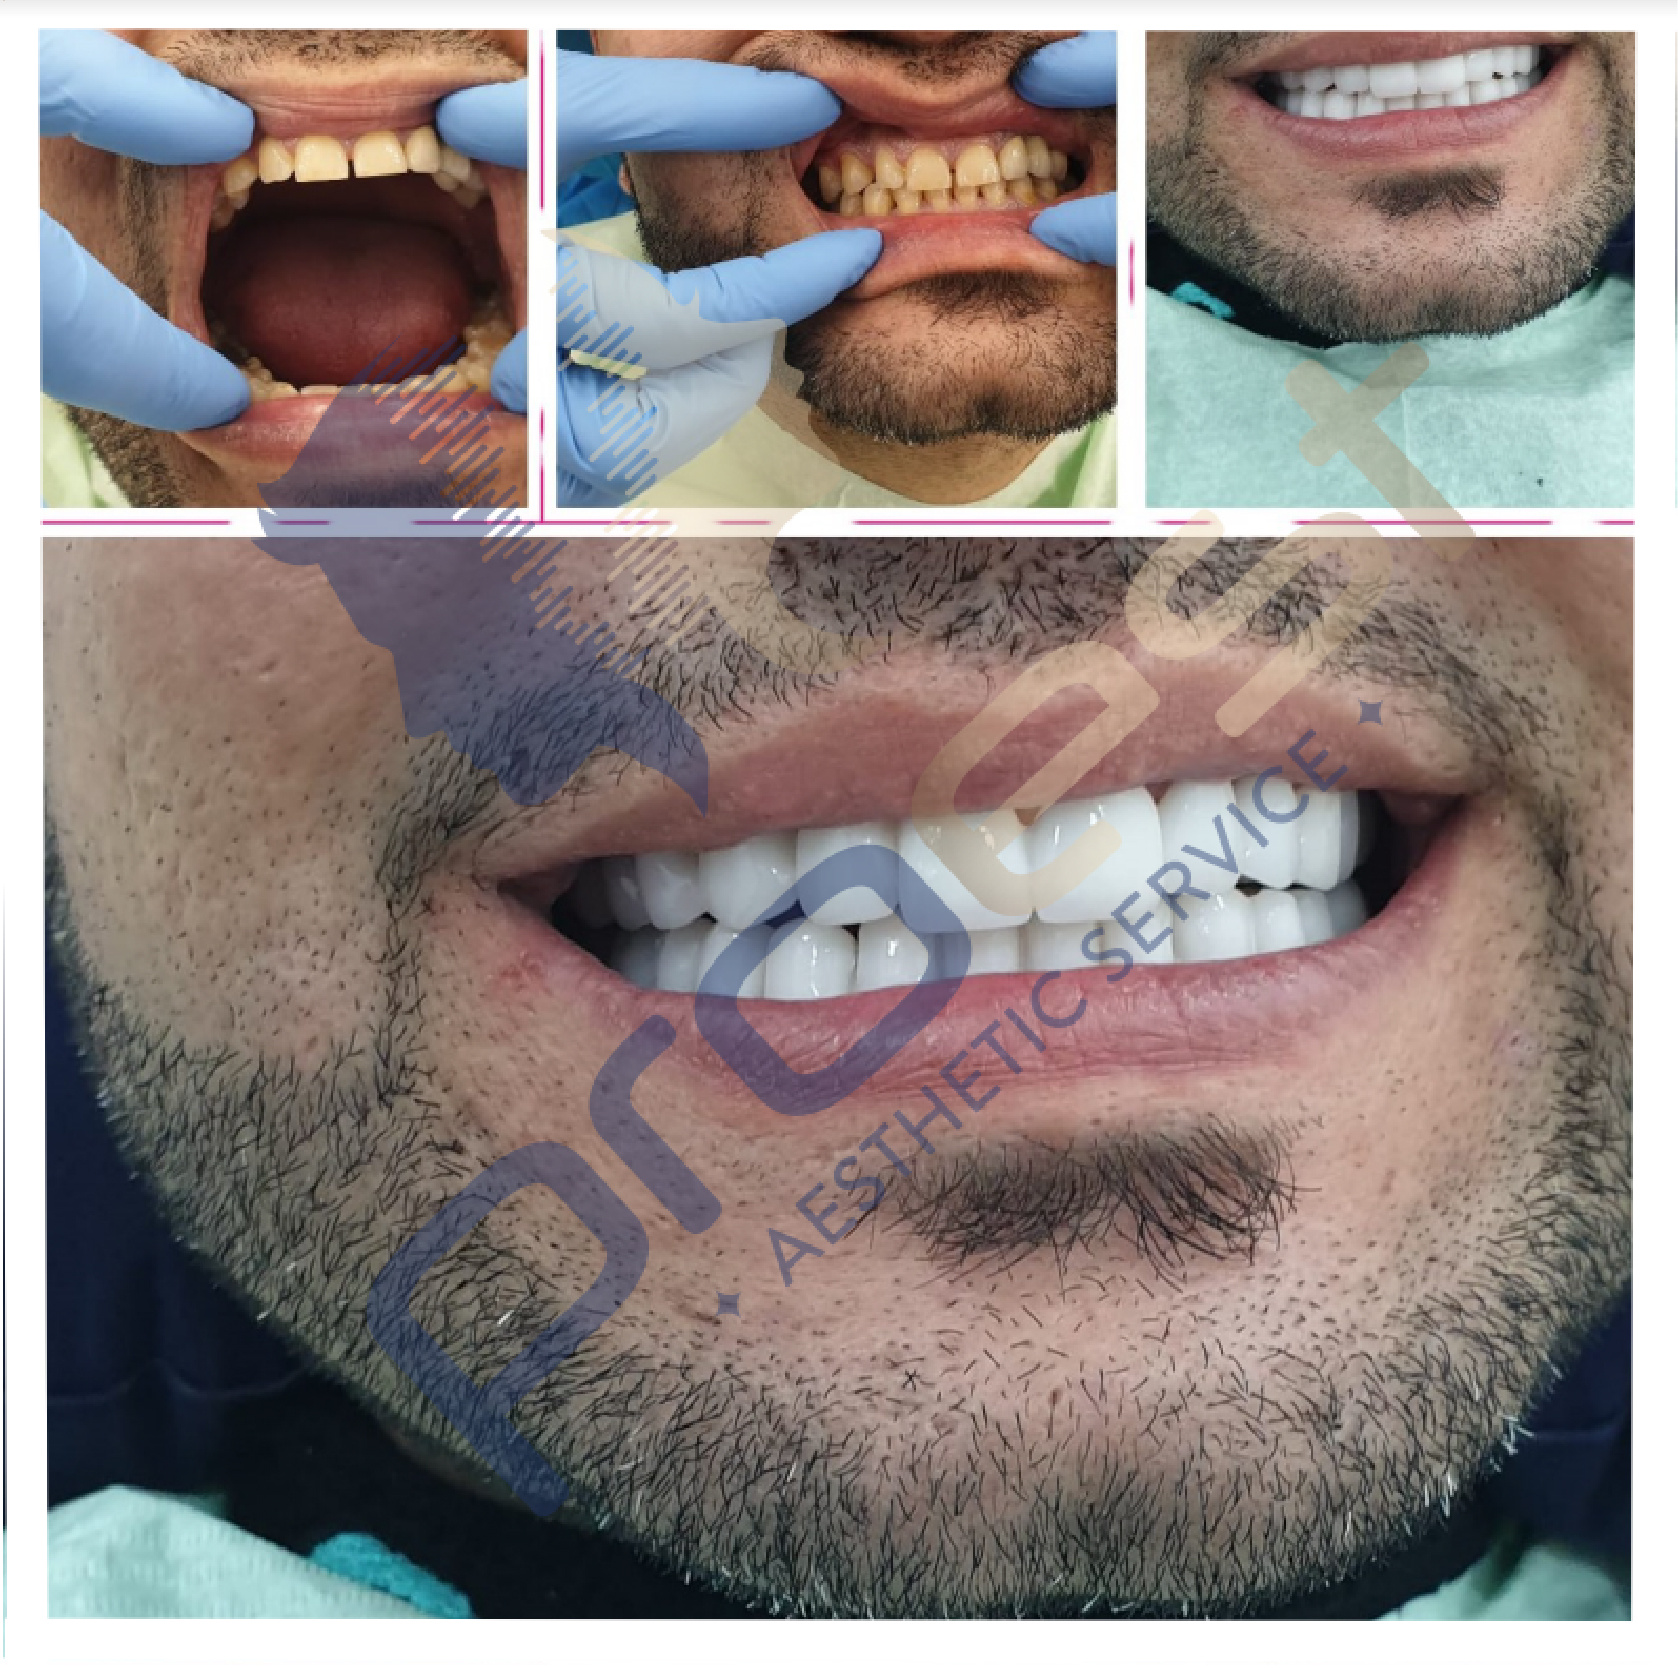 Dental Aesthetics